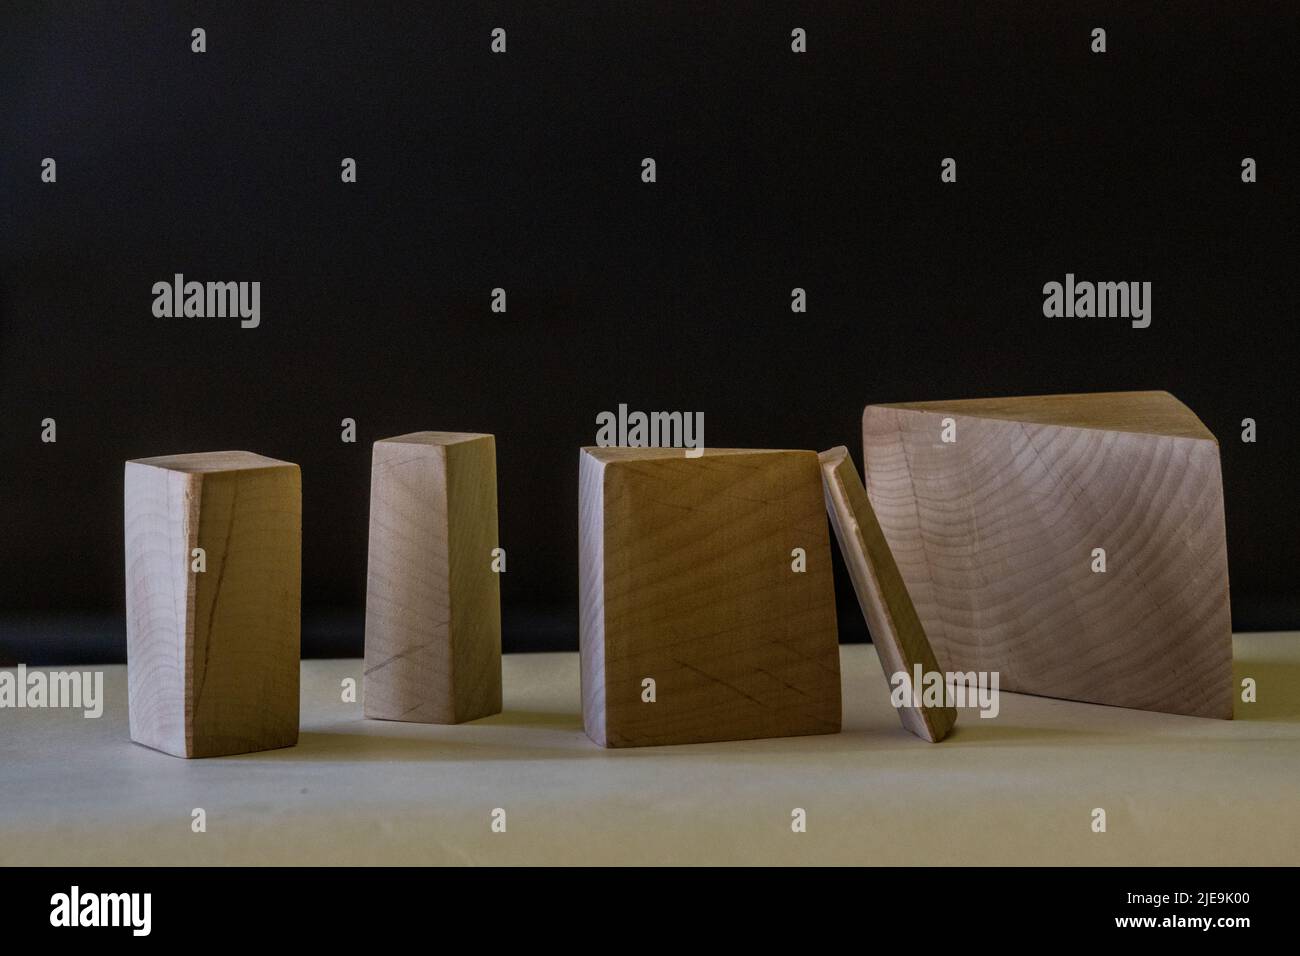 Amorphous wooden shapes Stock Photo